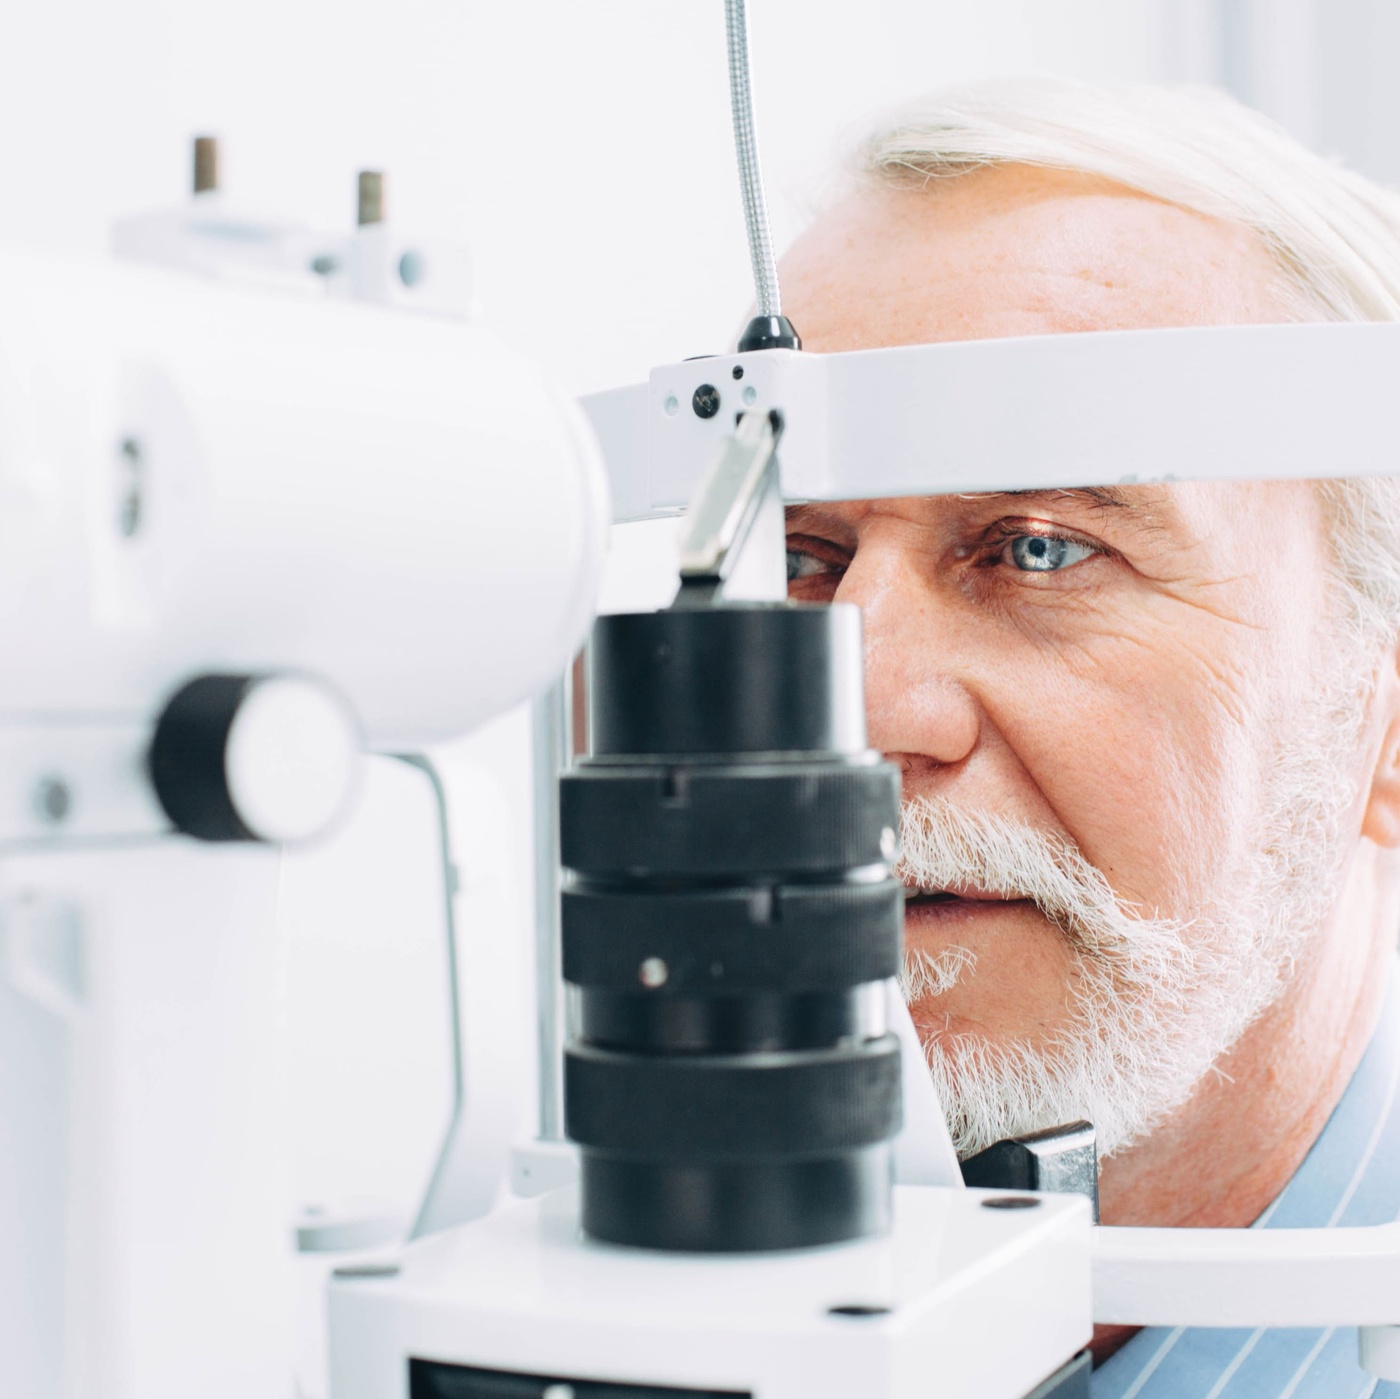 Augenuntersuchung mit Spaltlampenmikroskop bei einem MannExamen oculaire à la lampe à fente chez un homme